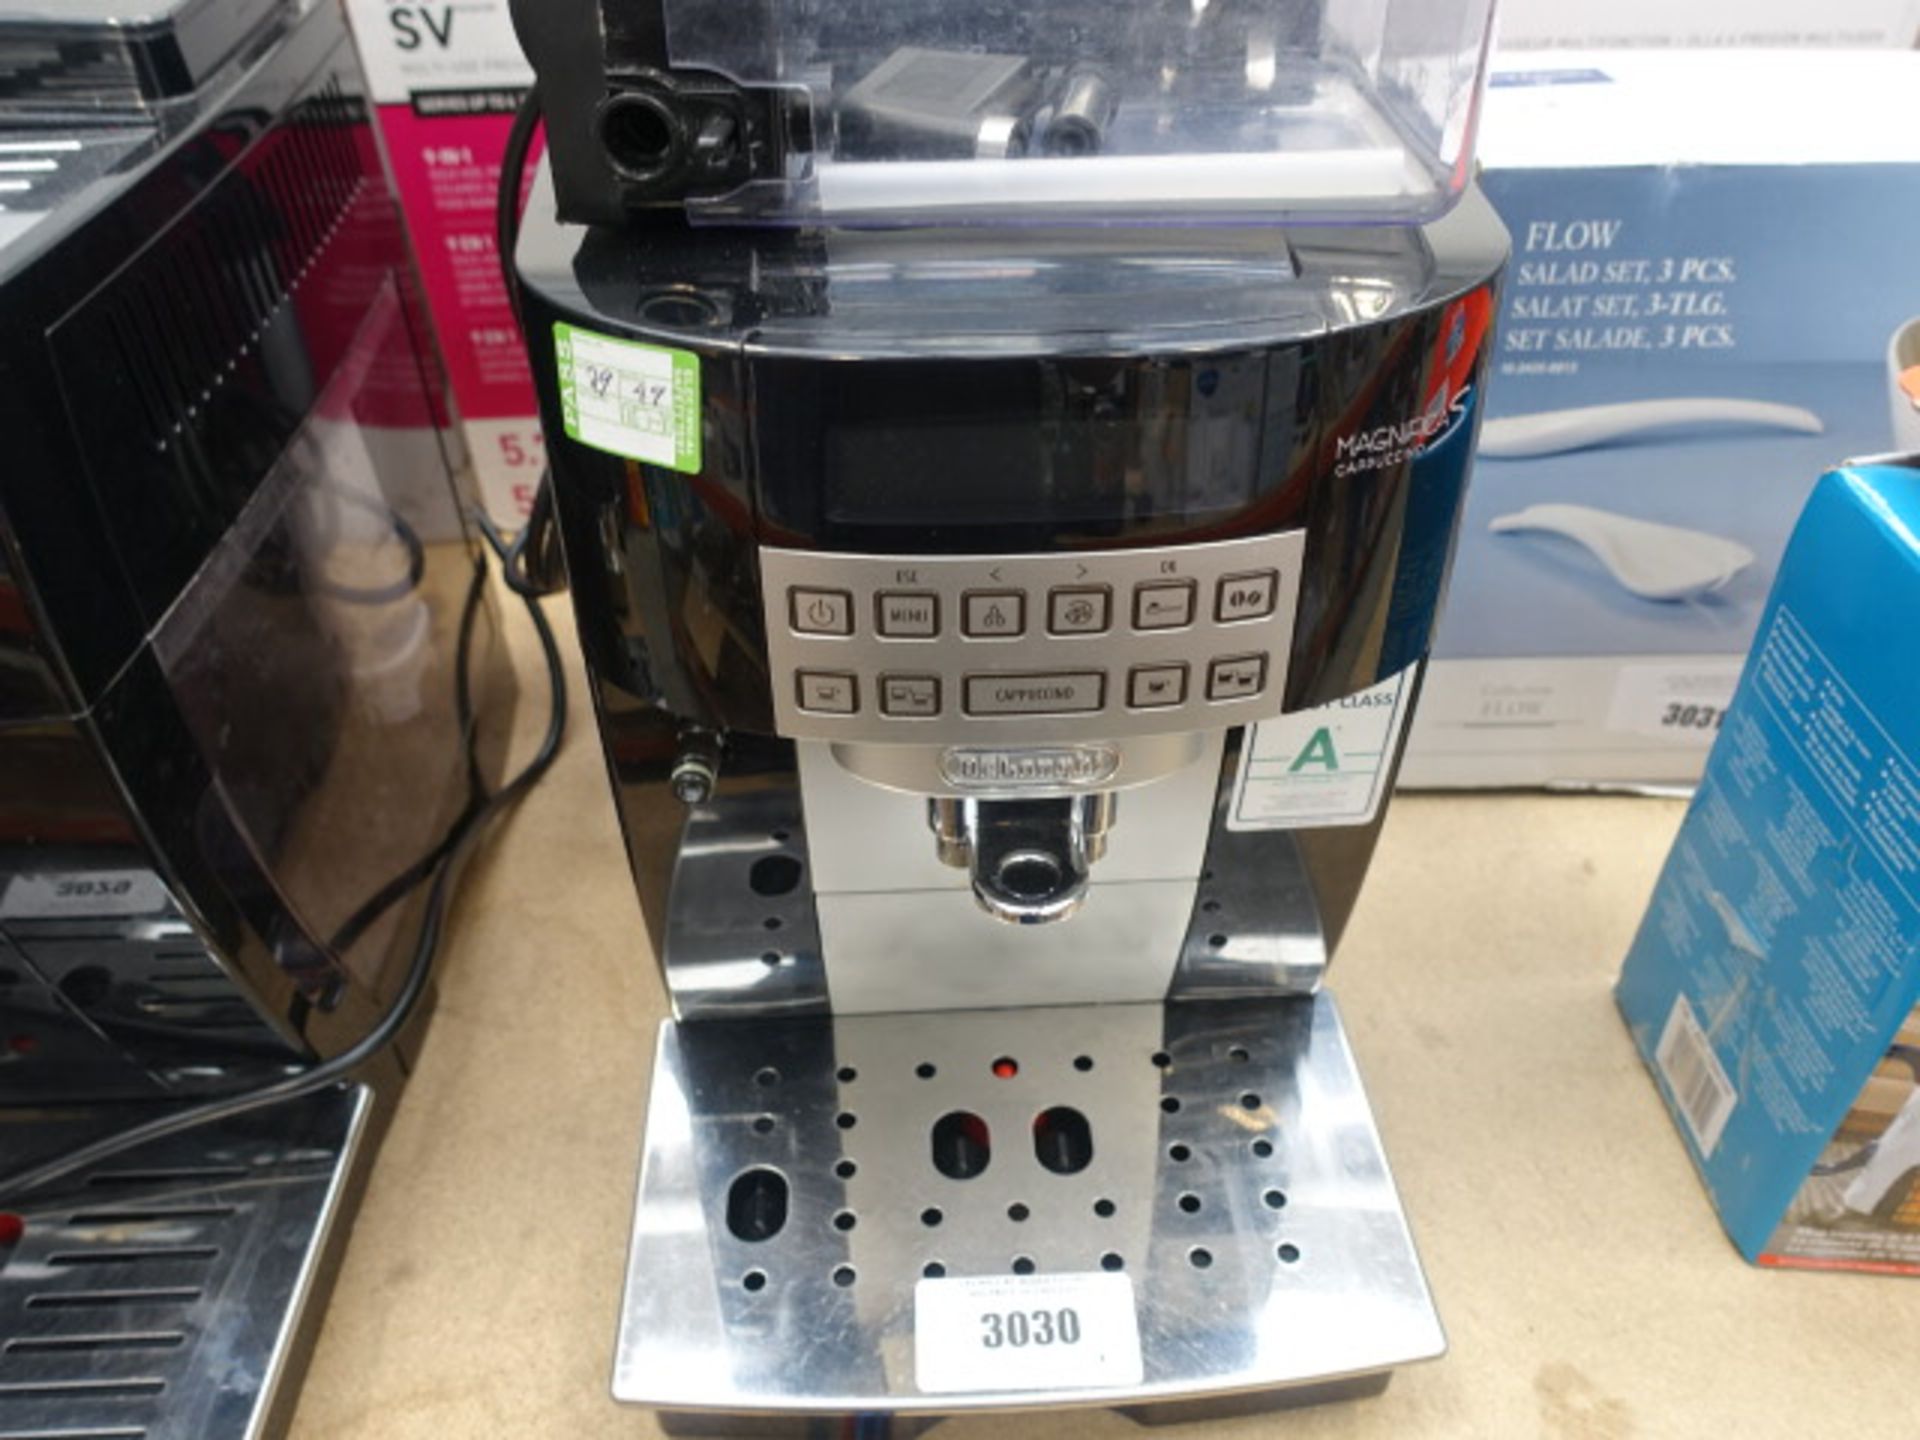 Unboxed Magnificus cappuccino coffee dispenser